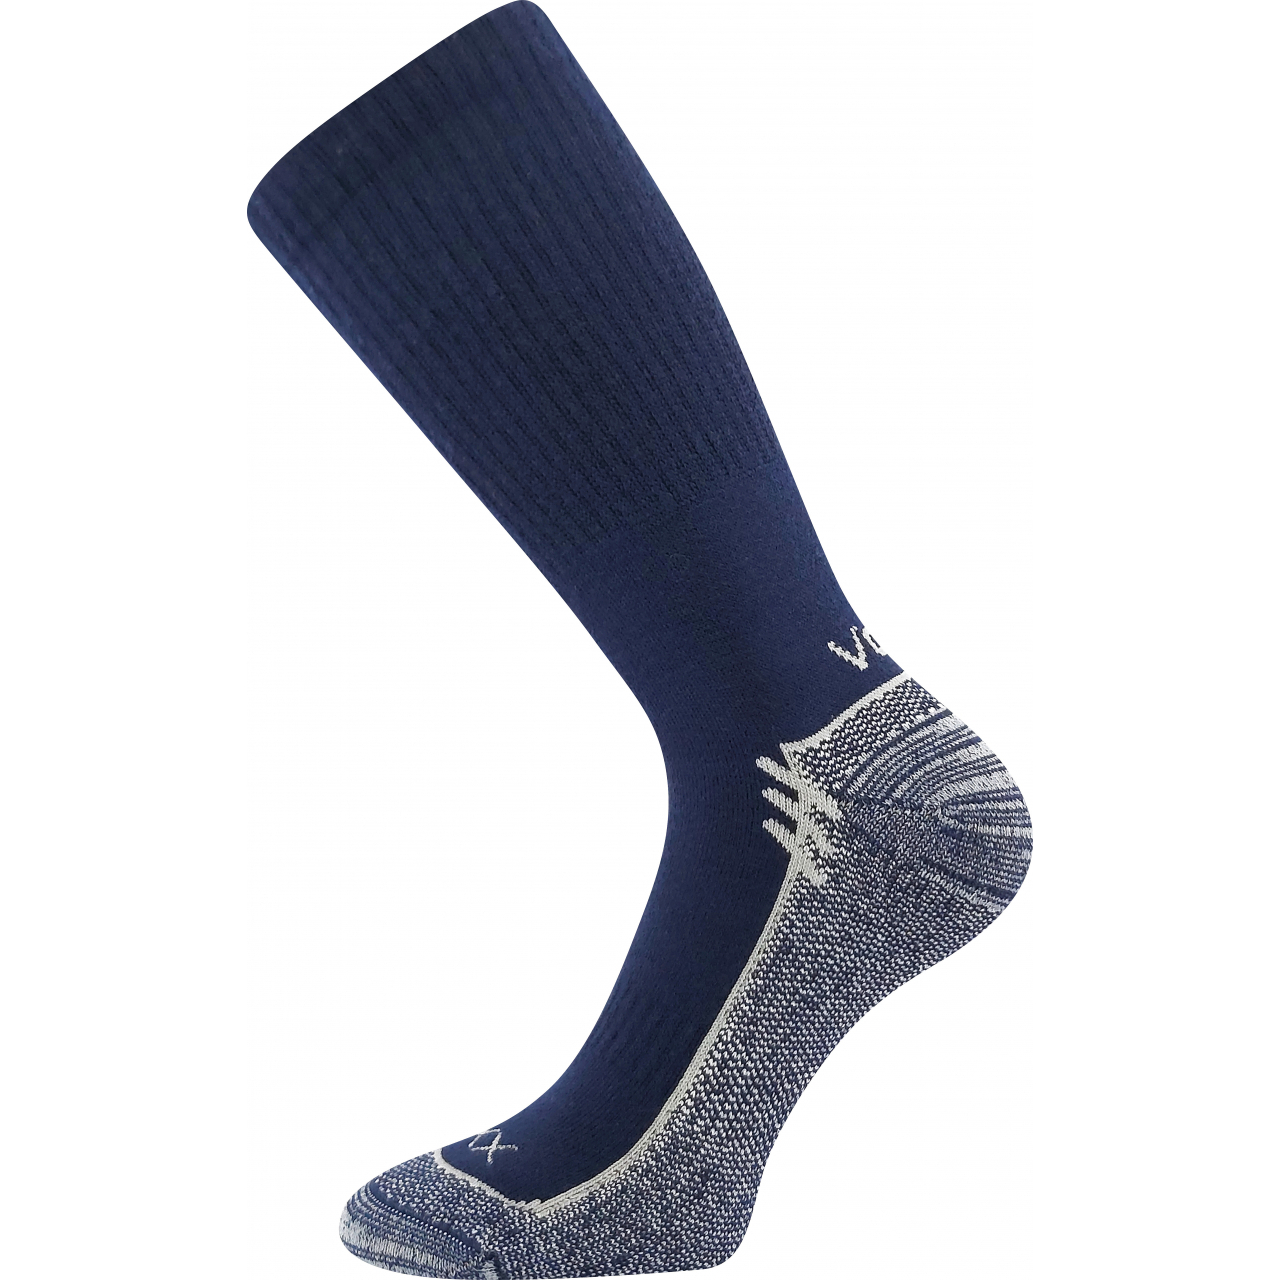 Ponožky trekingové unisex Voxx Phact - tmavě modré, 43-46